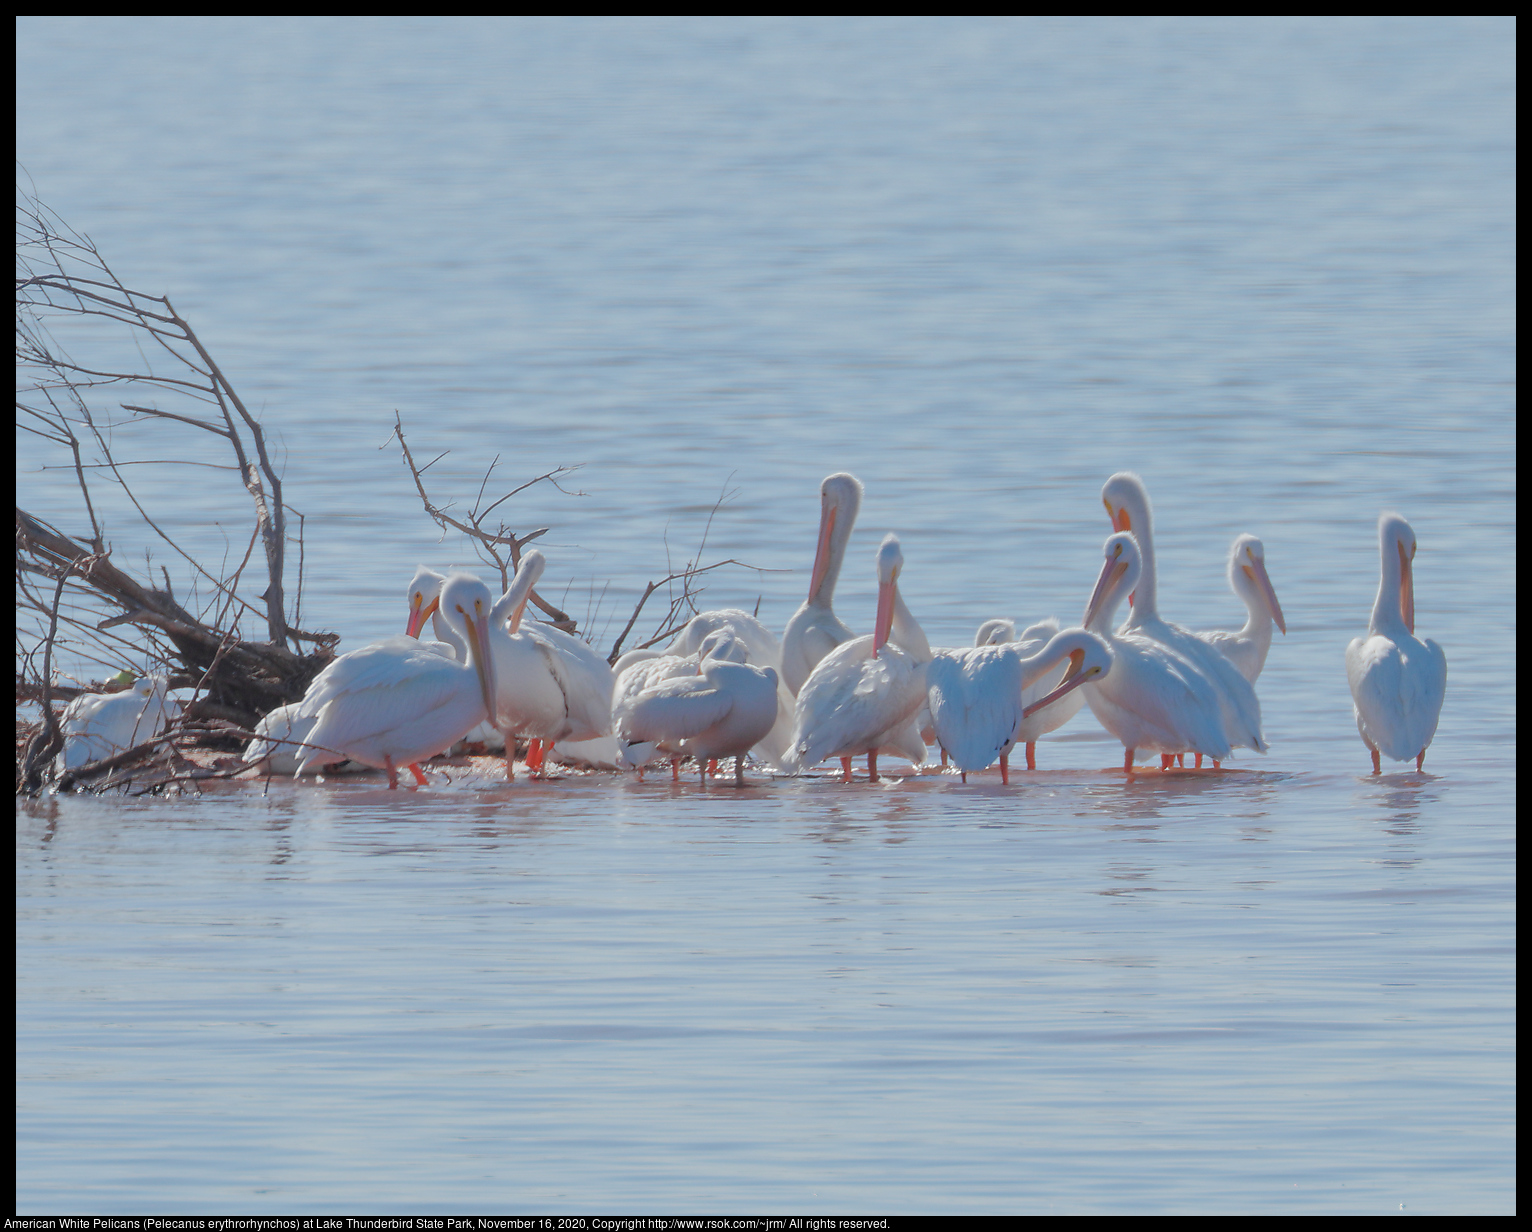 American White Pelicans (Pelecanus erythrorhynchos) at Lake Thunderbird State Park, November 16, 2020